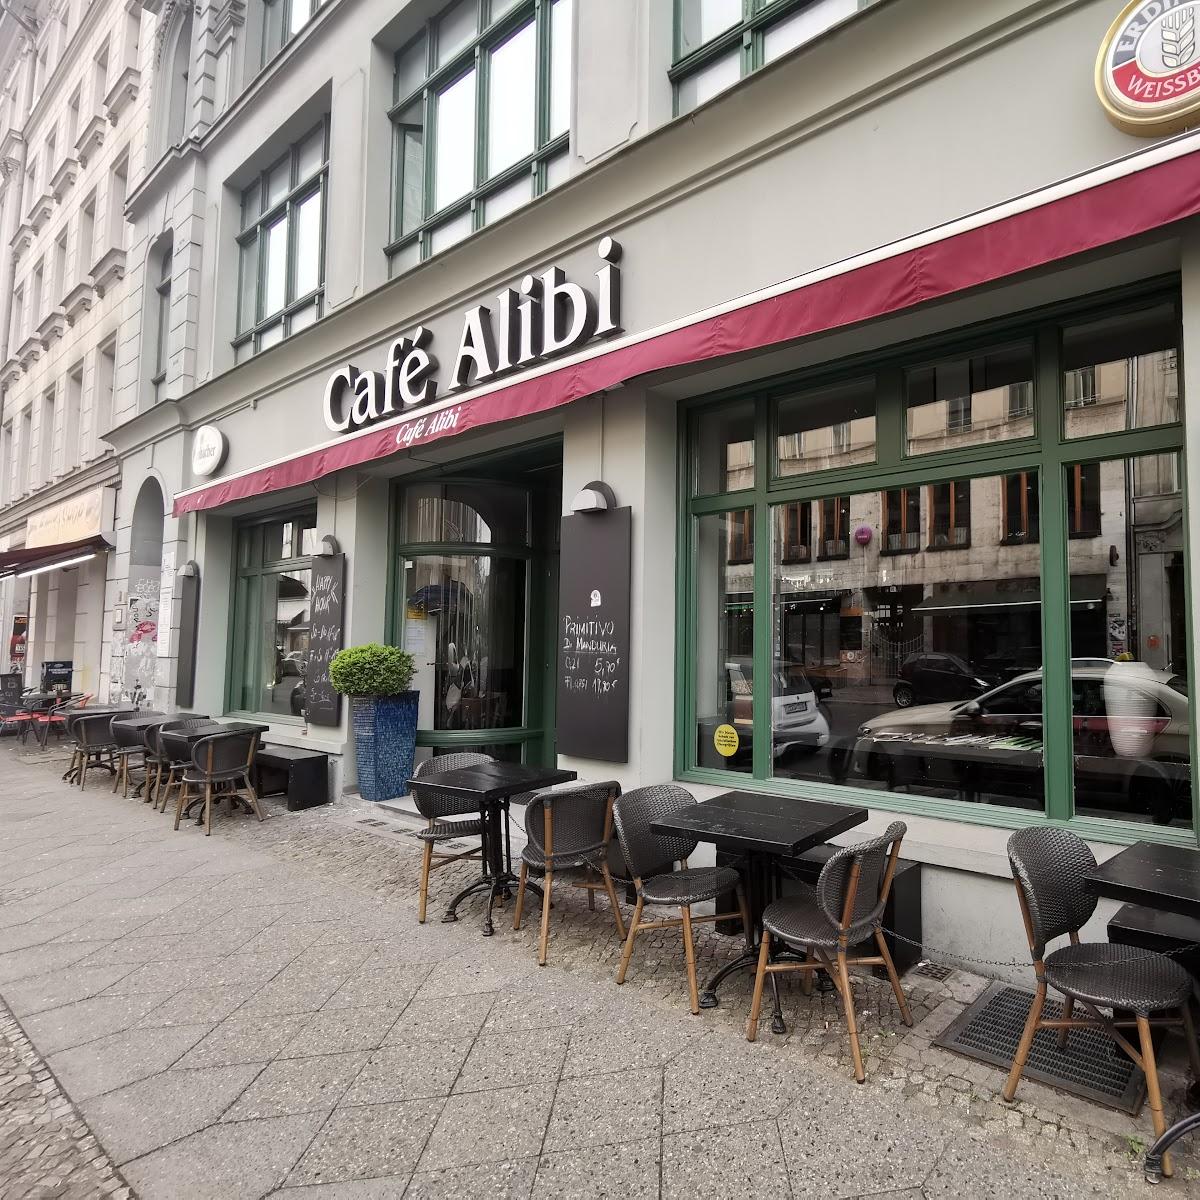 Restaurant "Café Alibi" in Berlin